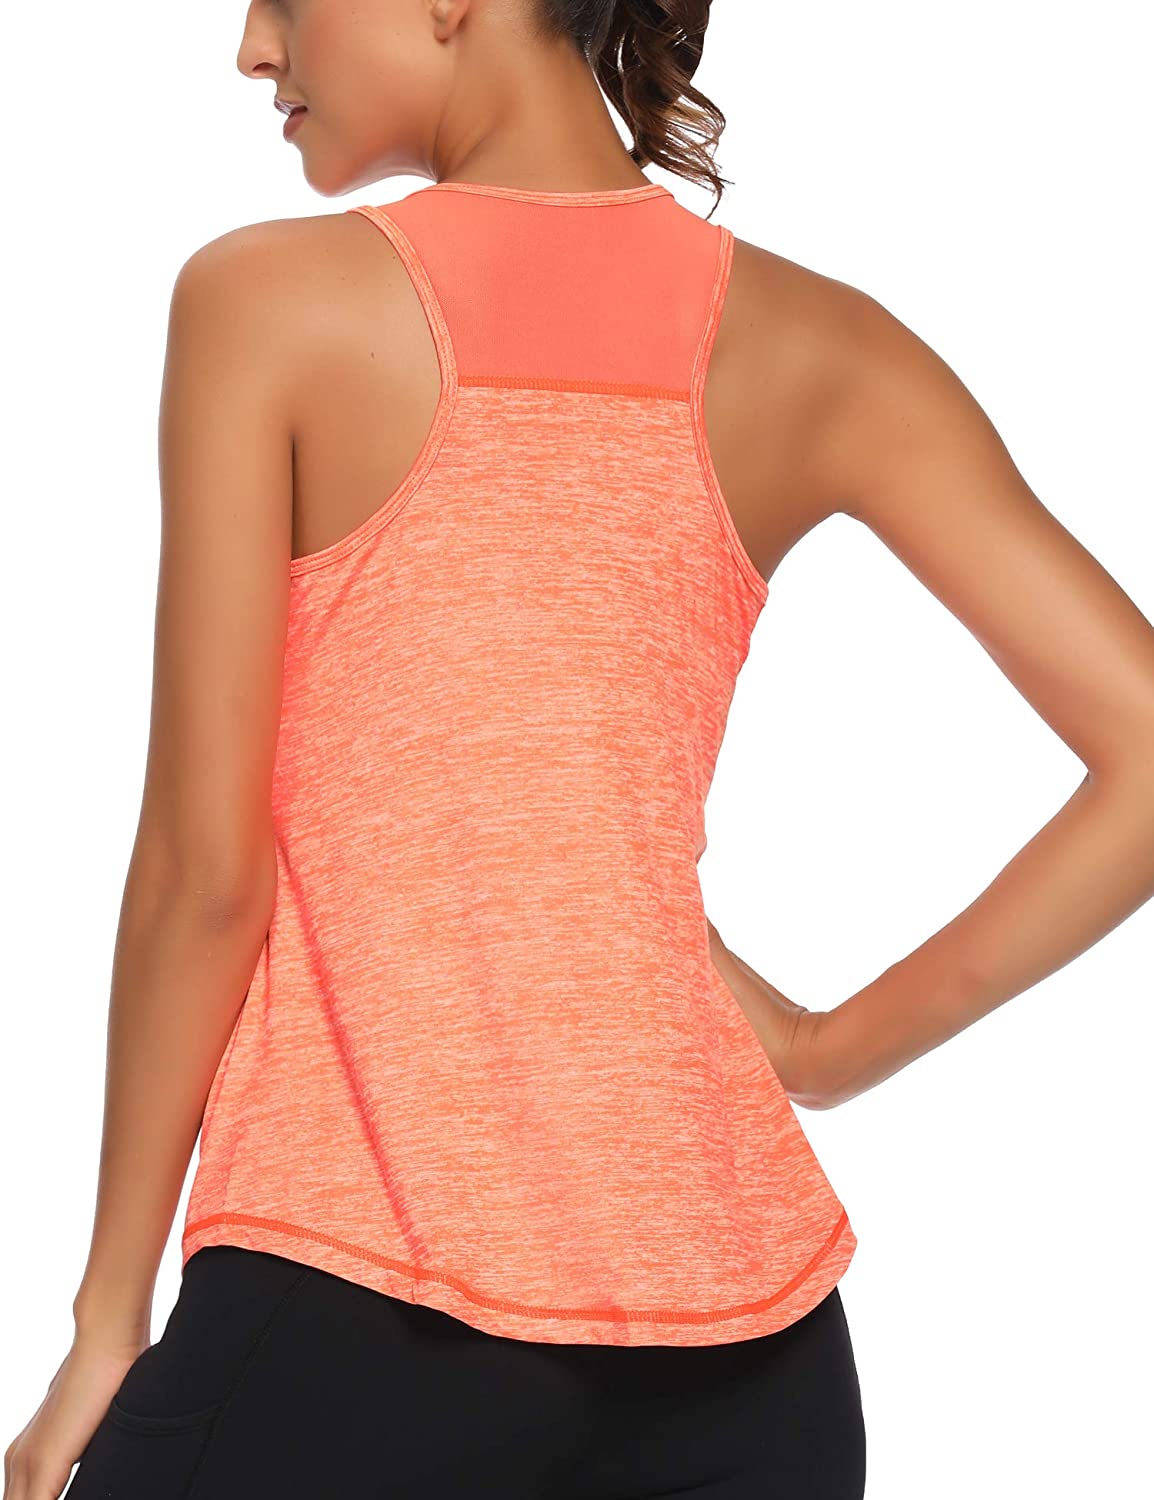 Aeuui Workout Tank Tops for Women Sleeveless Racerback Mesh Yoga Shirts Athletic Sports Running Tops 